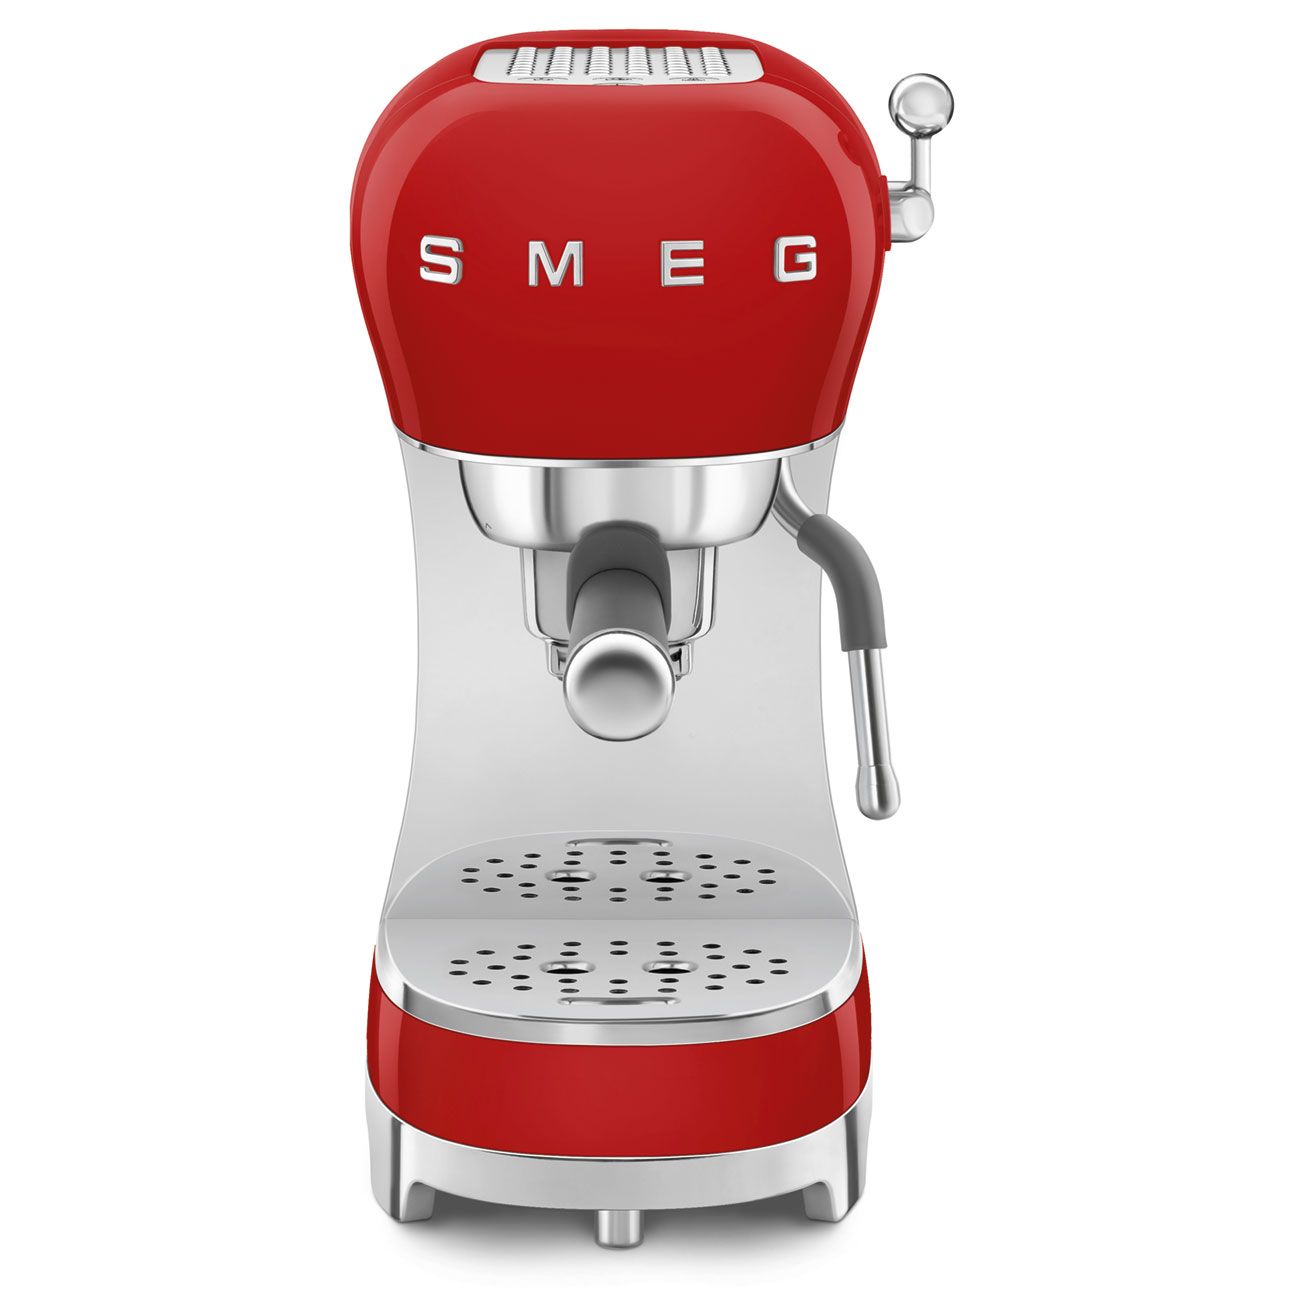 Cafetera Espresso Manual  Smeg 50's style - Jemaq